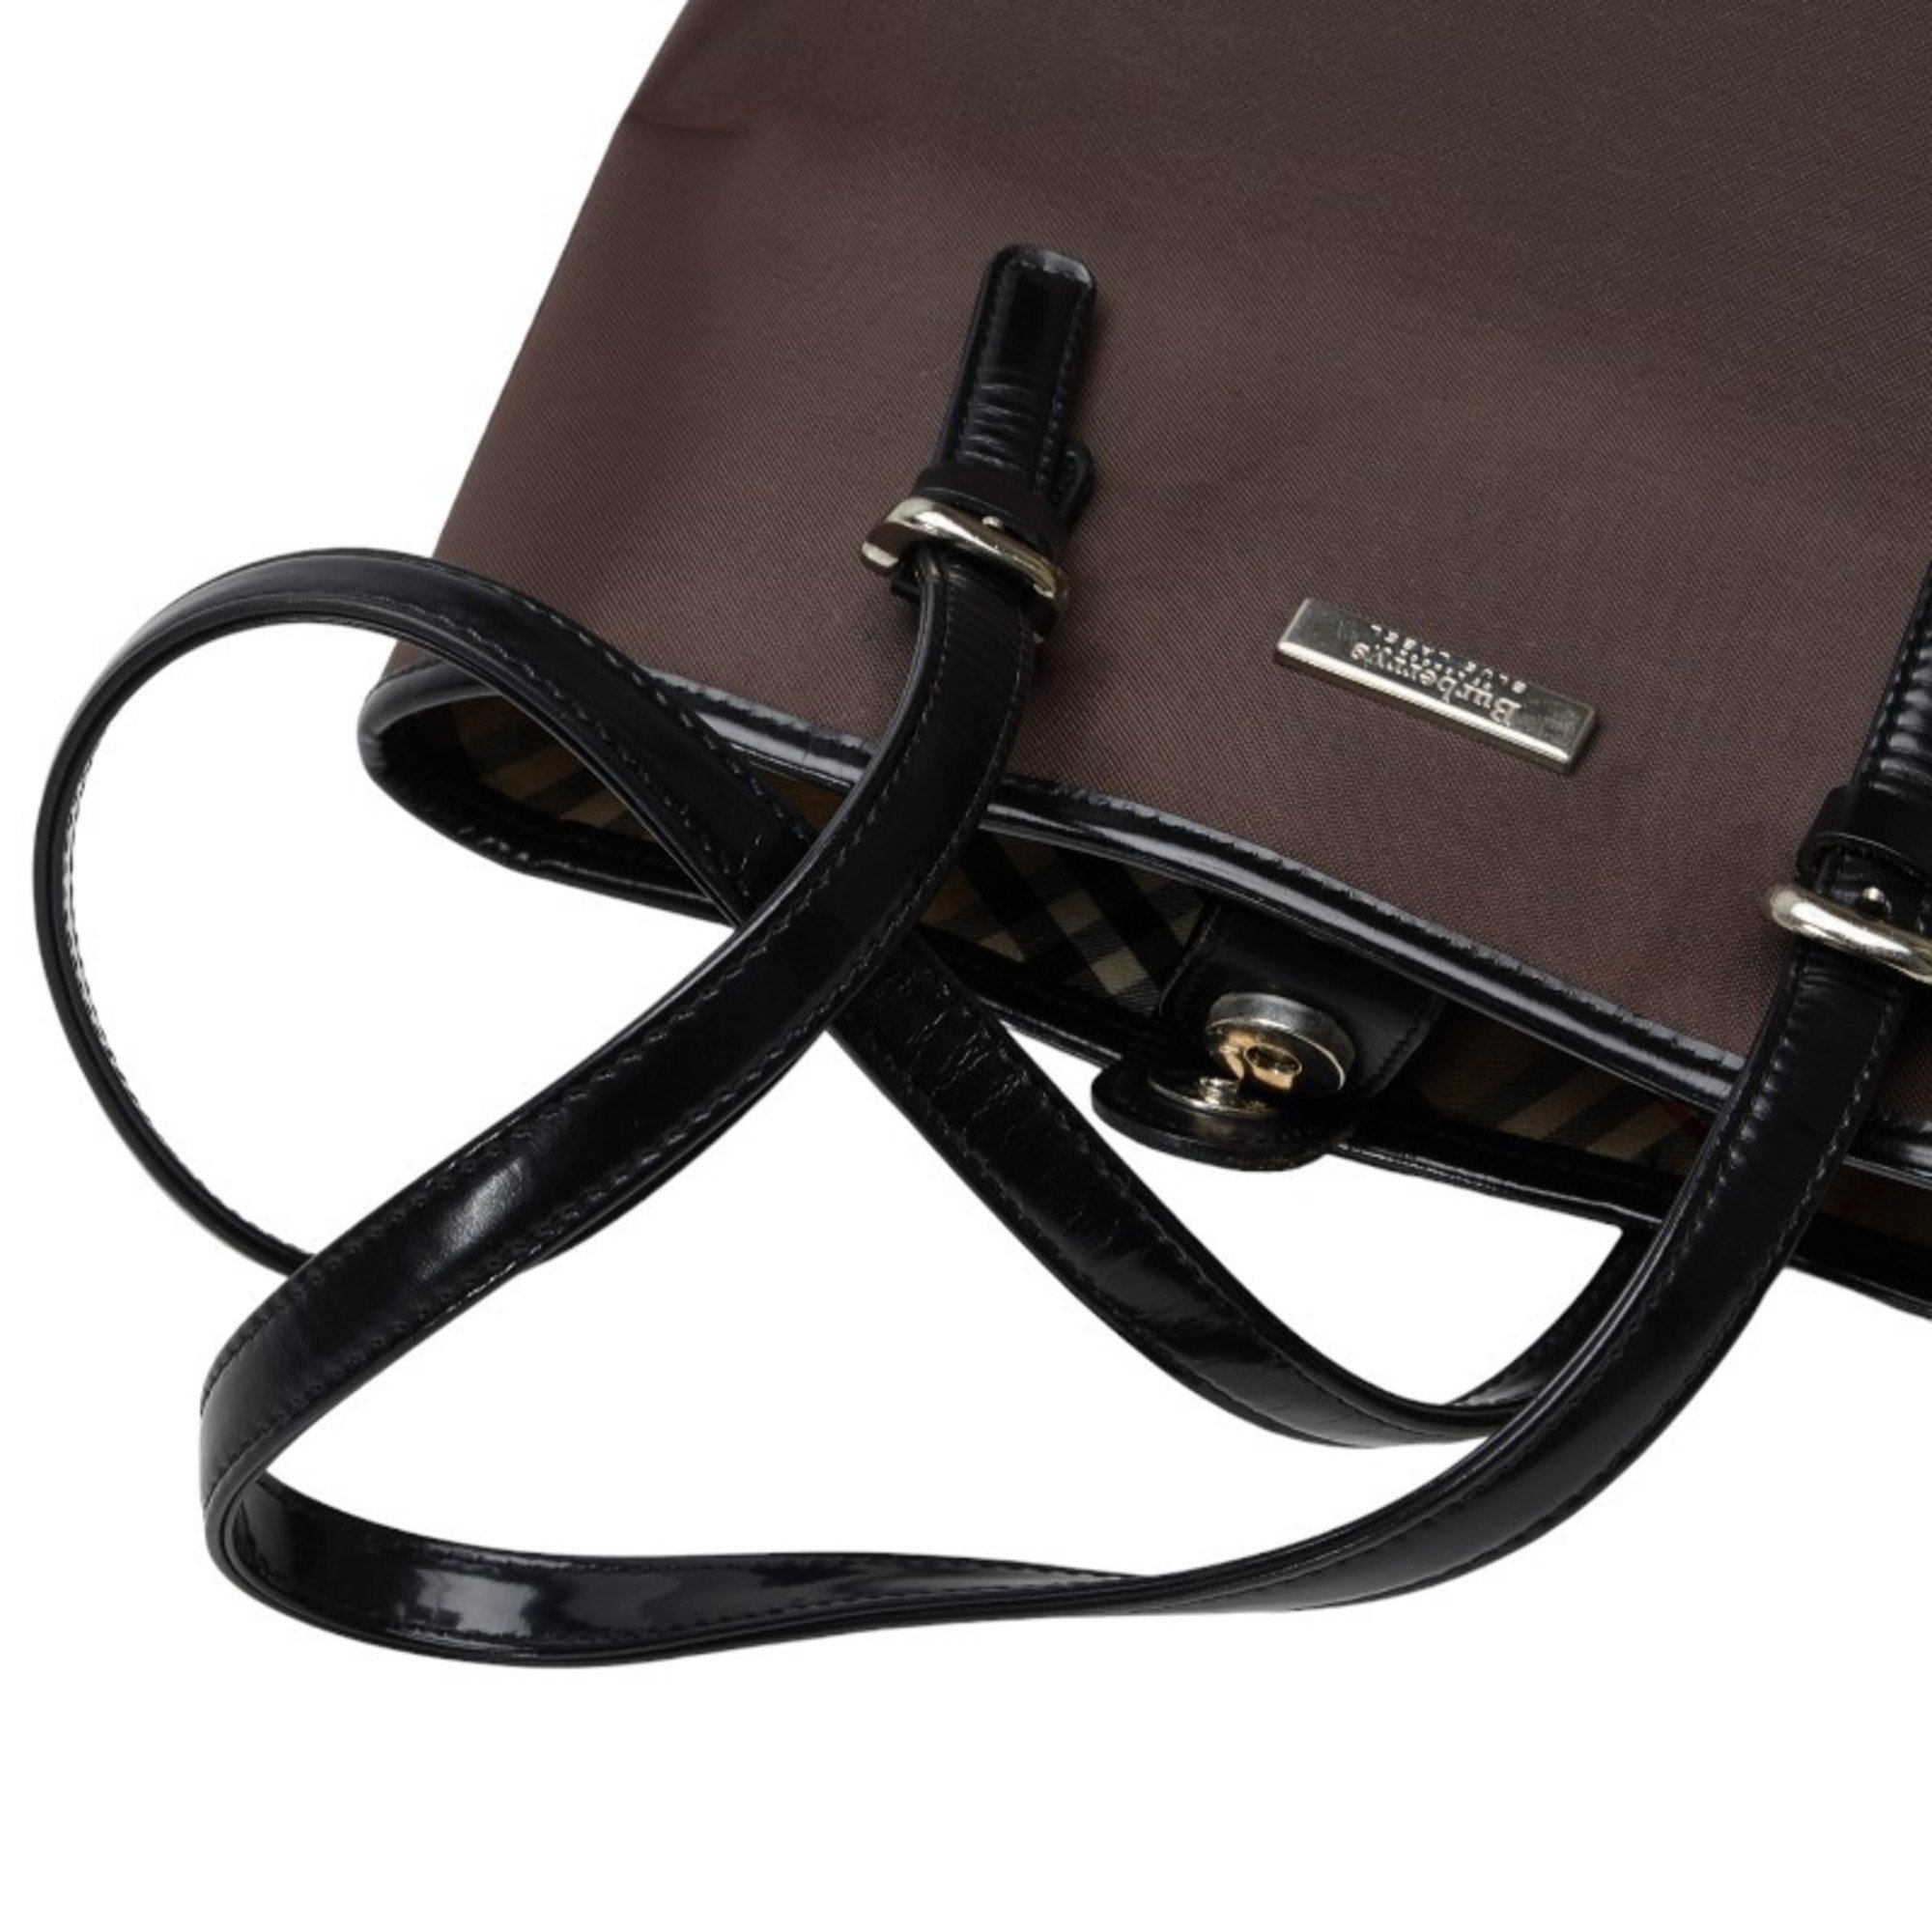 Burberry Nova Check Handbag Tote Bag Brown Black Nylon Leather Women's BURBERRY